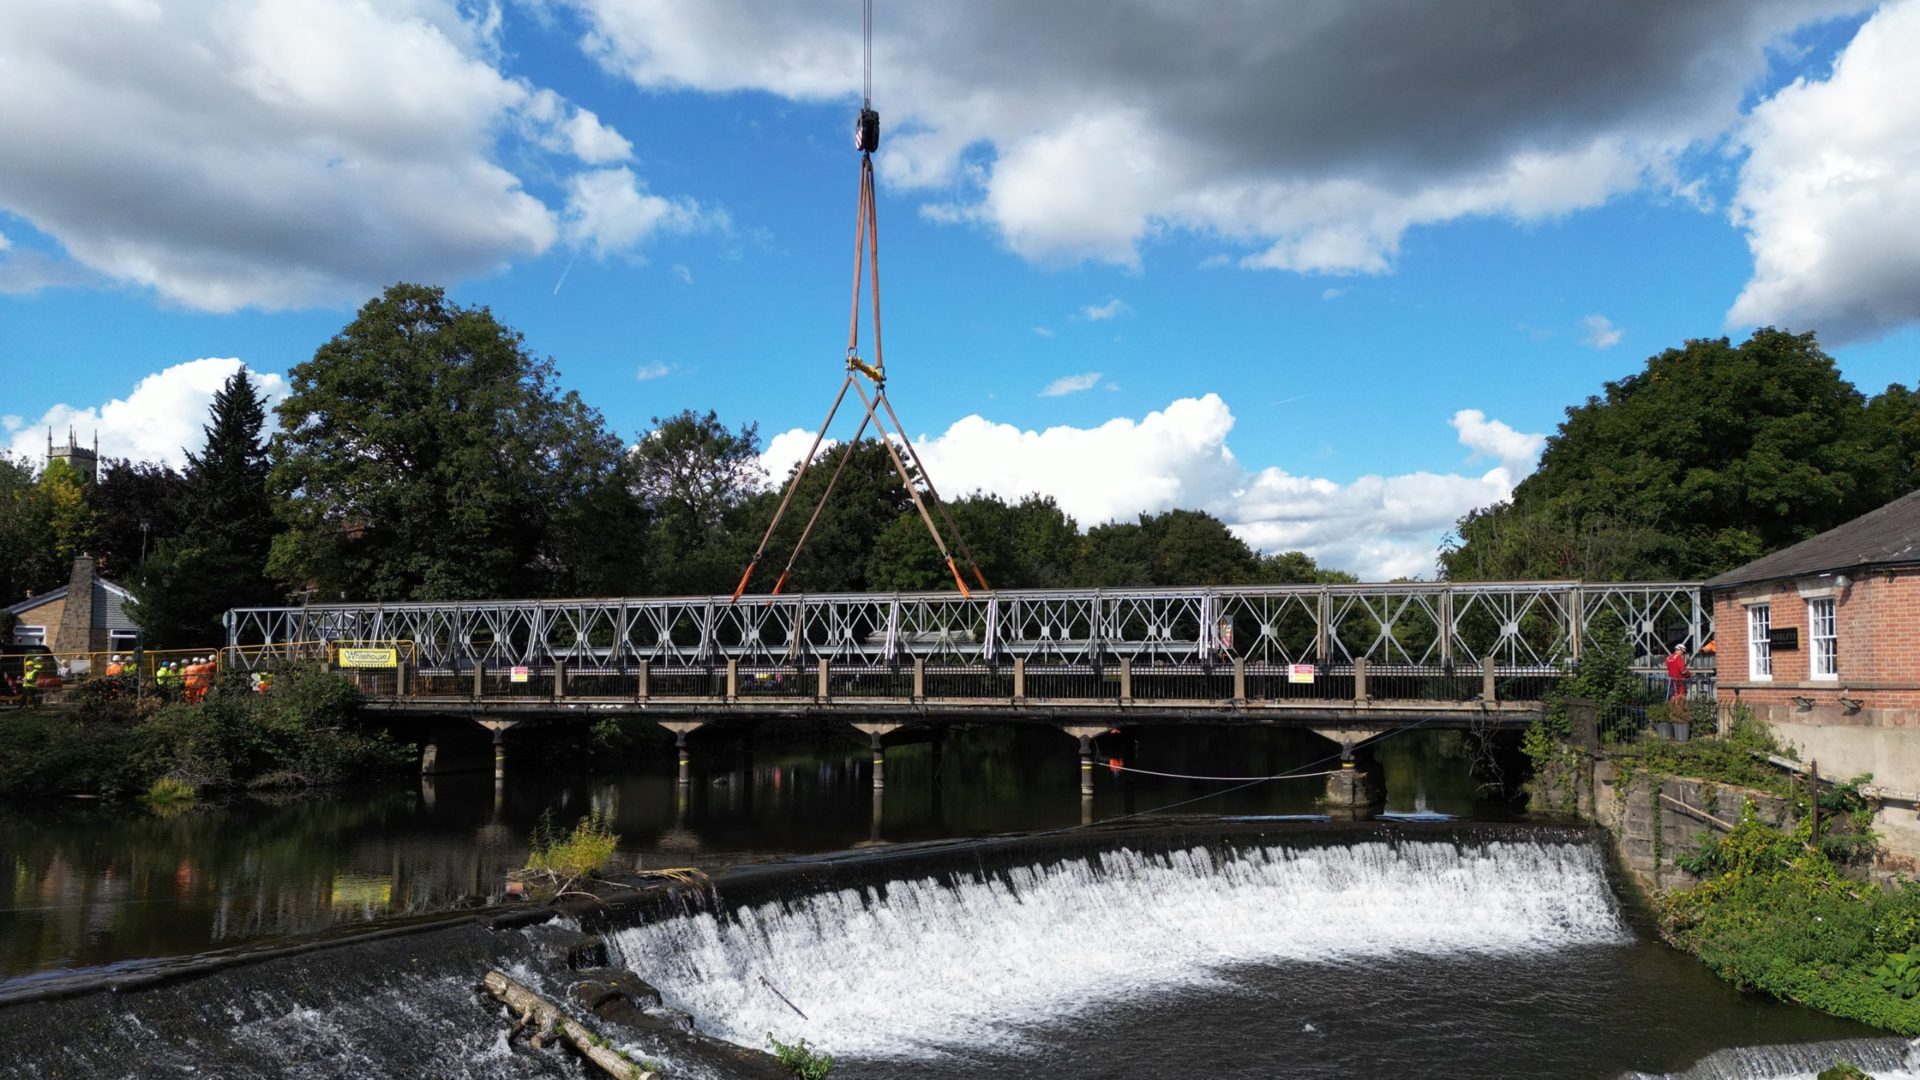 A 500-tonne capacity crane lifts a temporary bridge into position